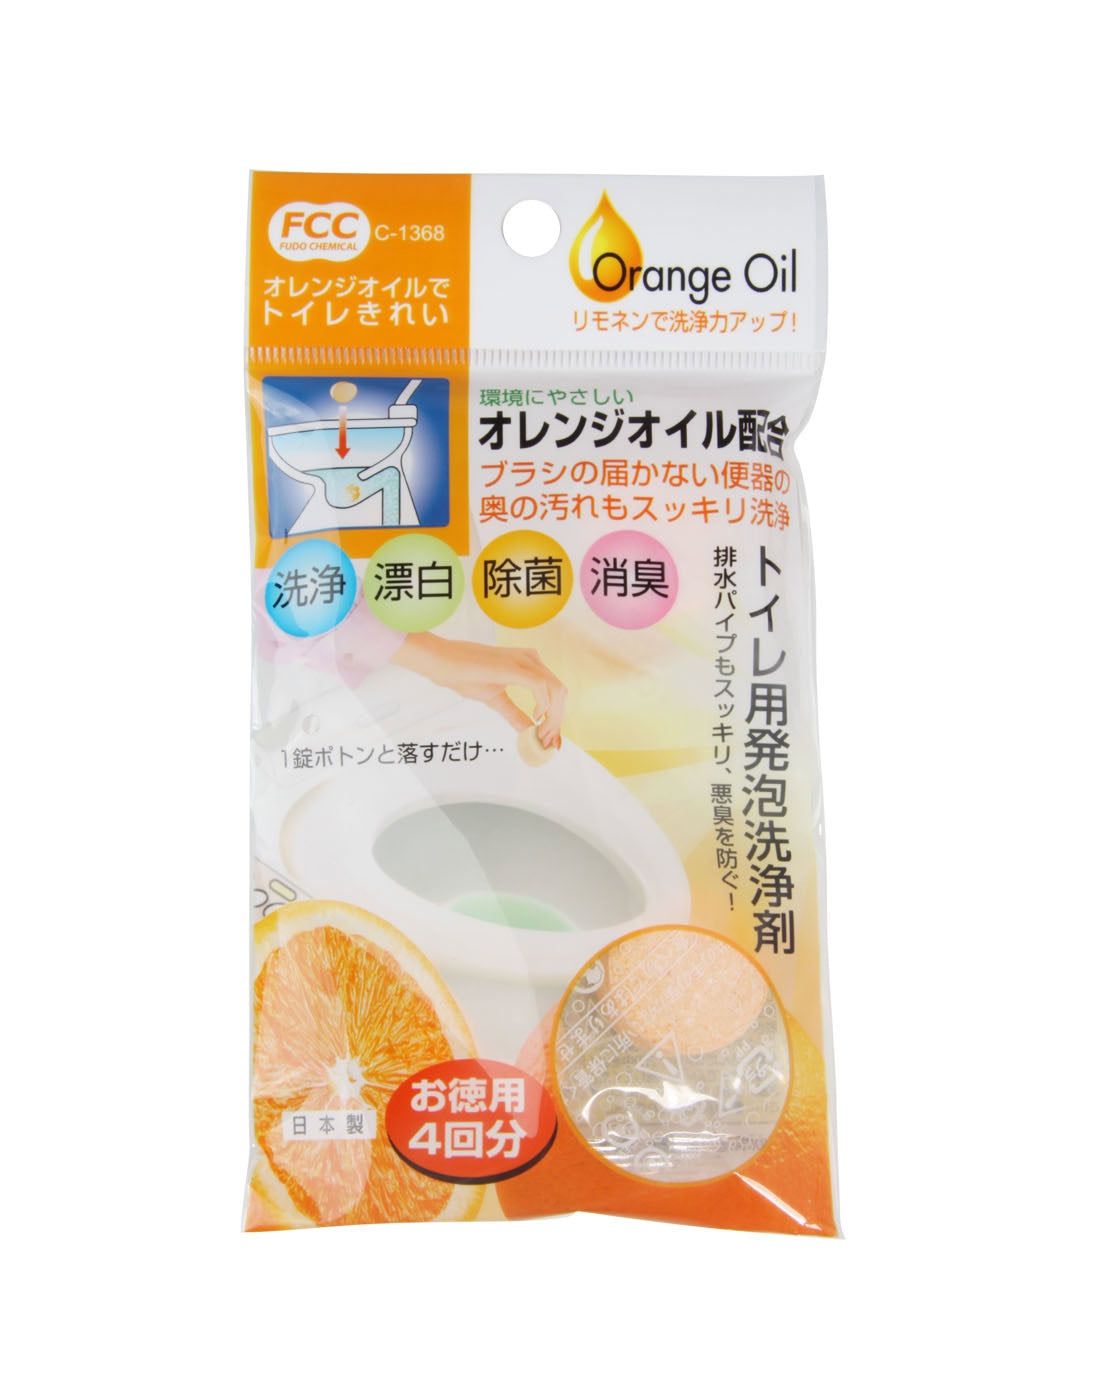 FUDO Toilet Cleanser with Orange Oil 4pcs